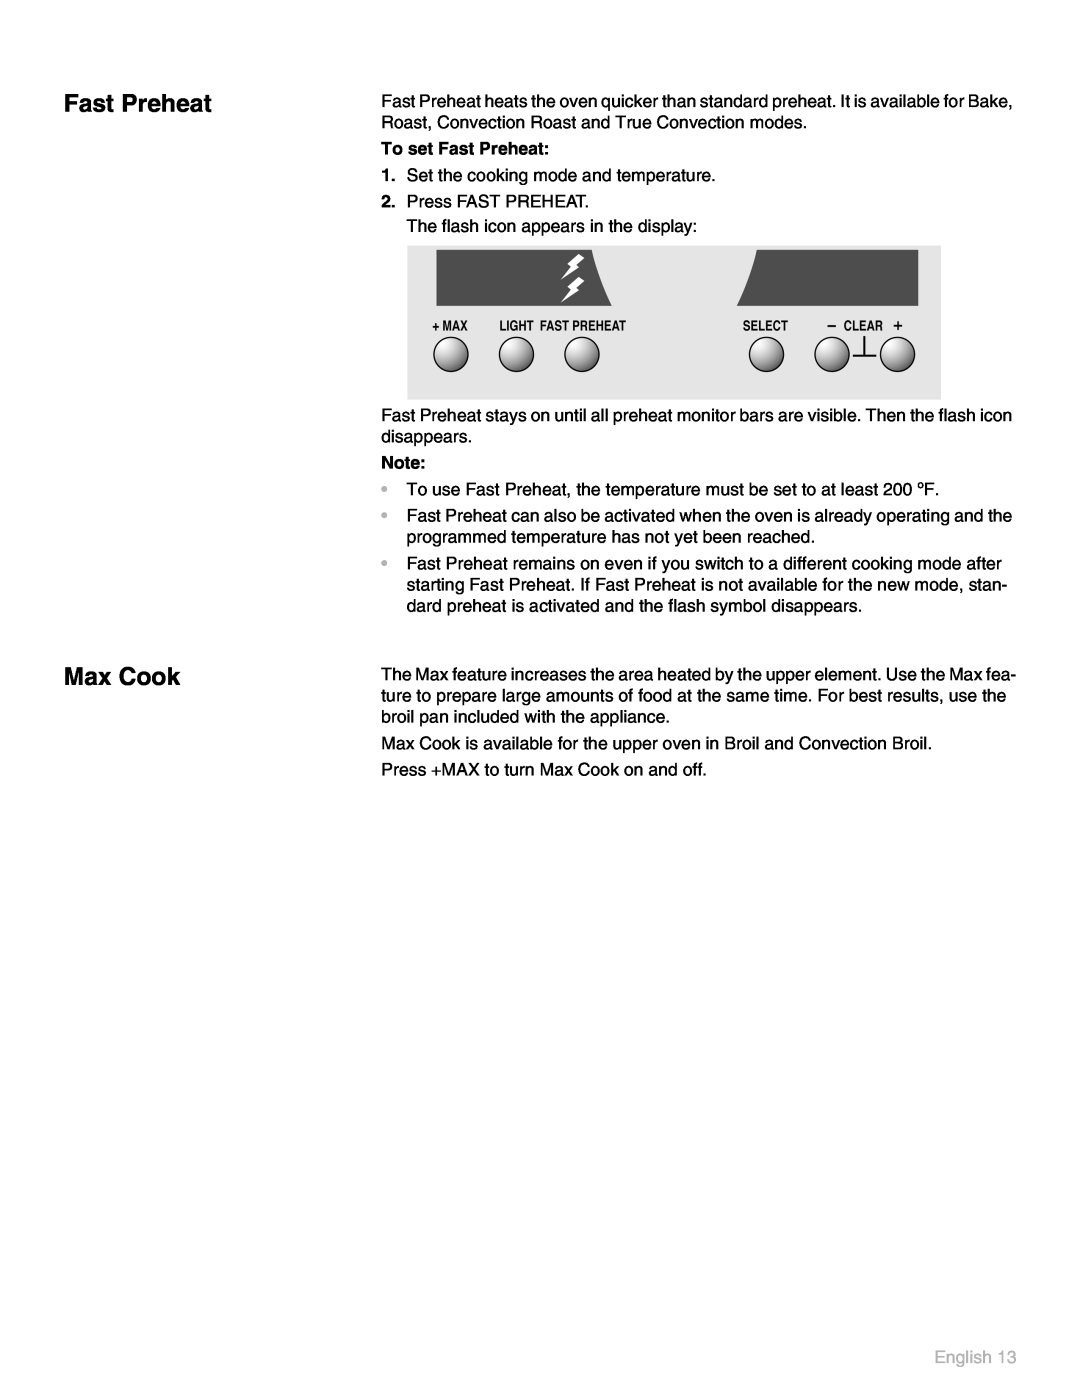 Thermador POD302 manual Fast Preheat Max Cook, To set Fast Preheat, English 